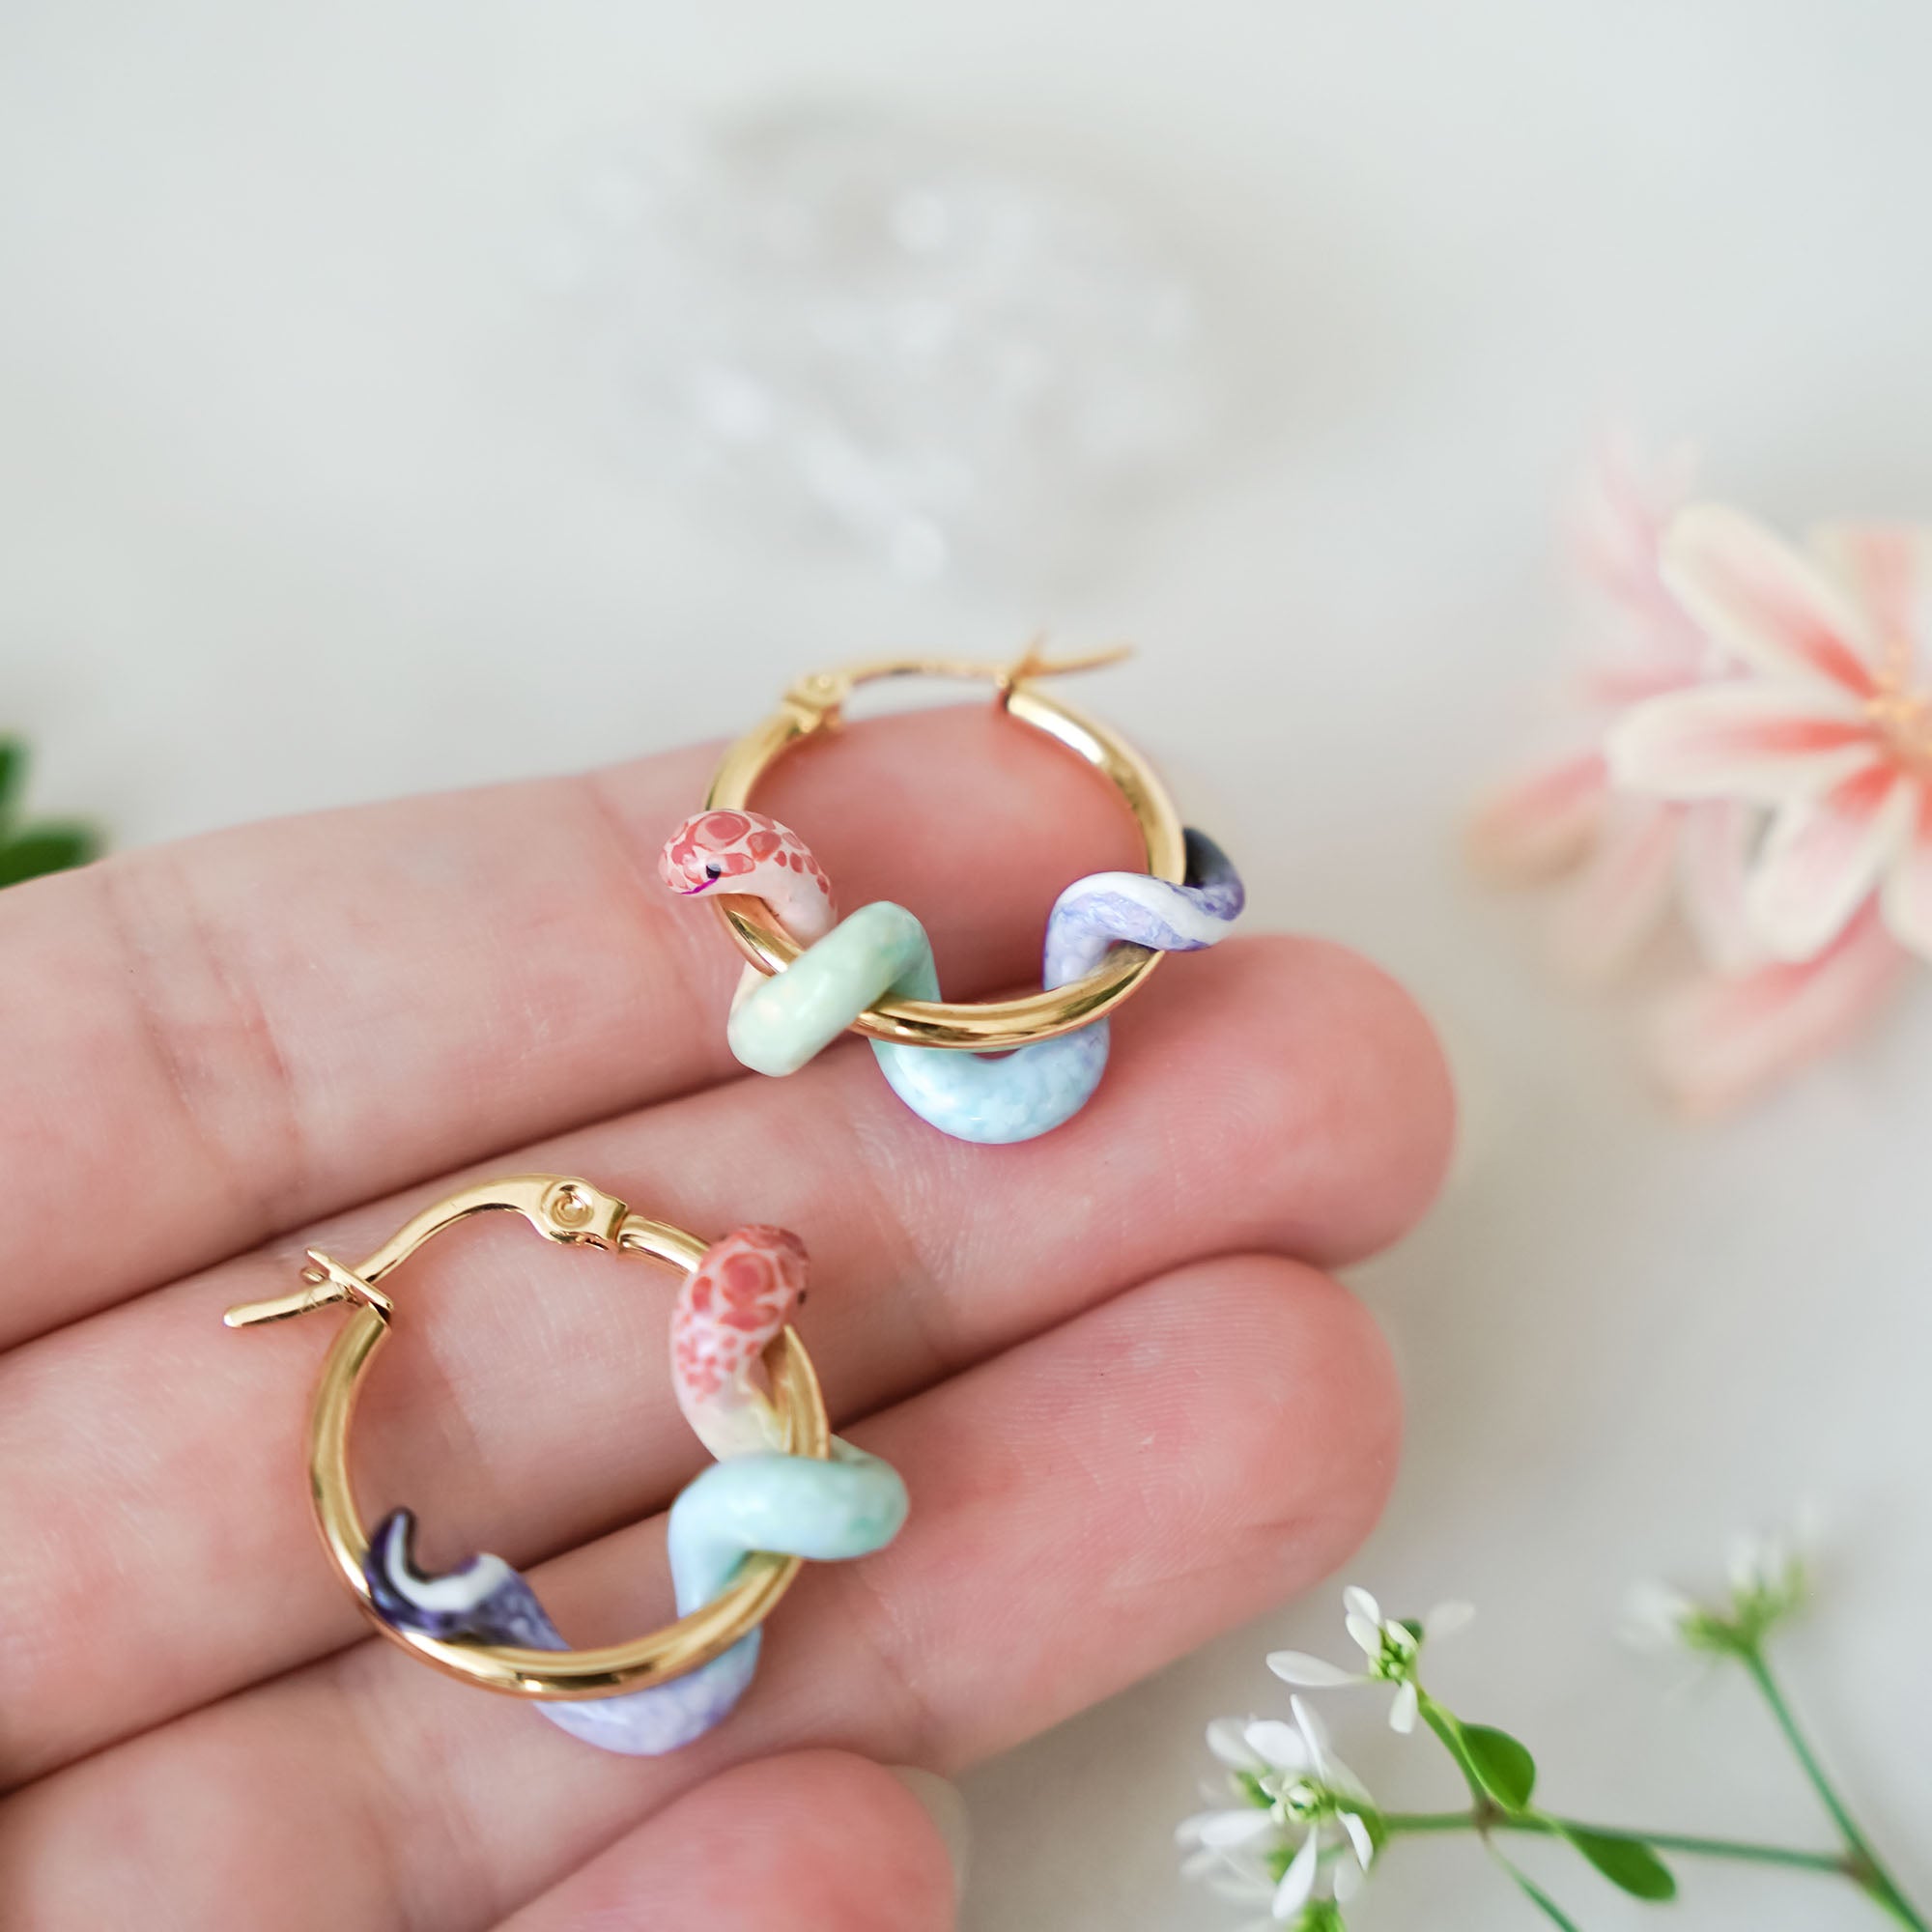 Mini rainbow pastel snake earrings